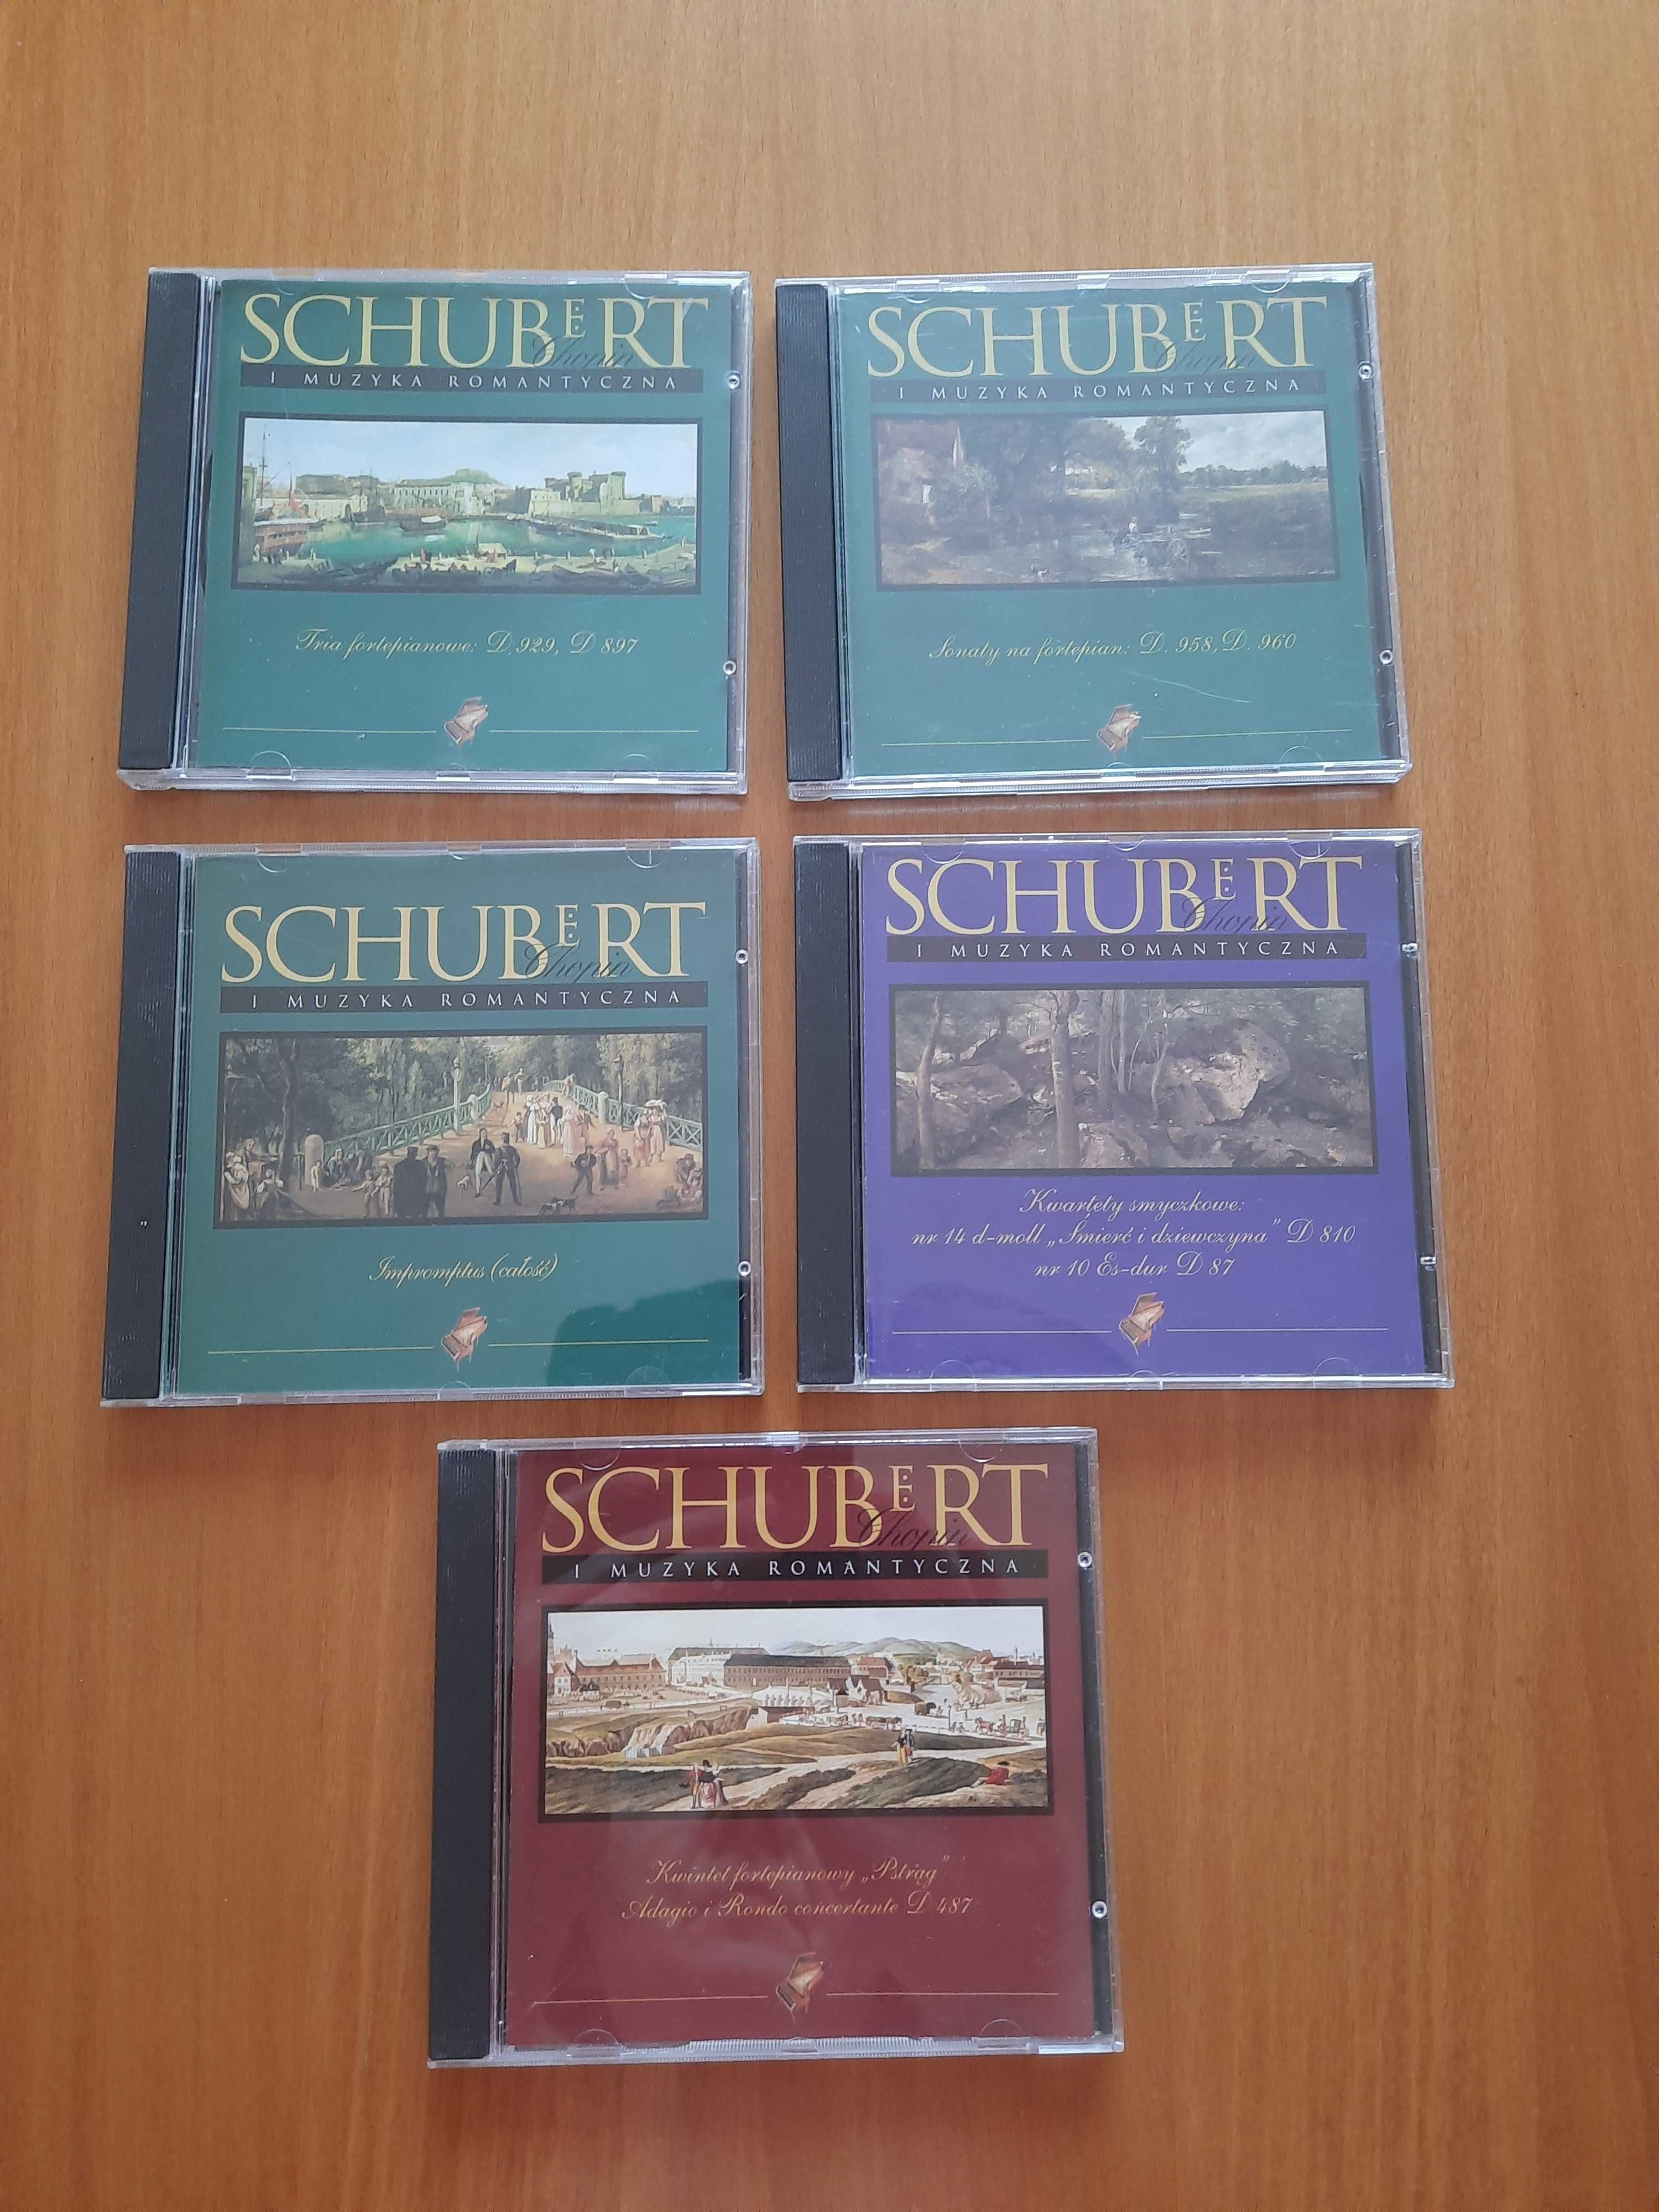 Schubert - muzyka romantyczna